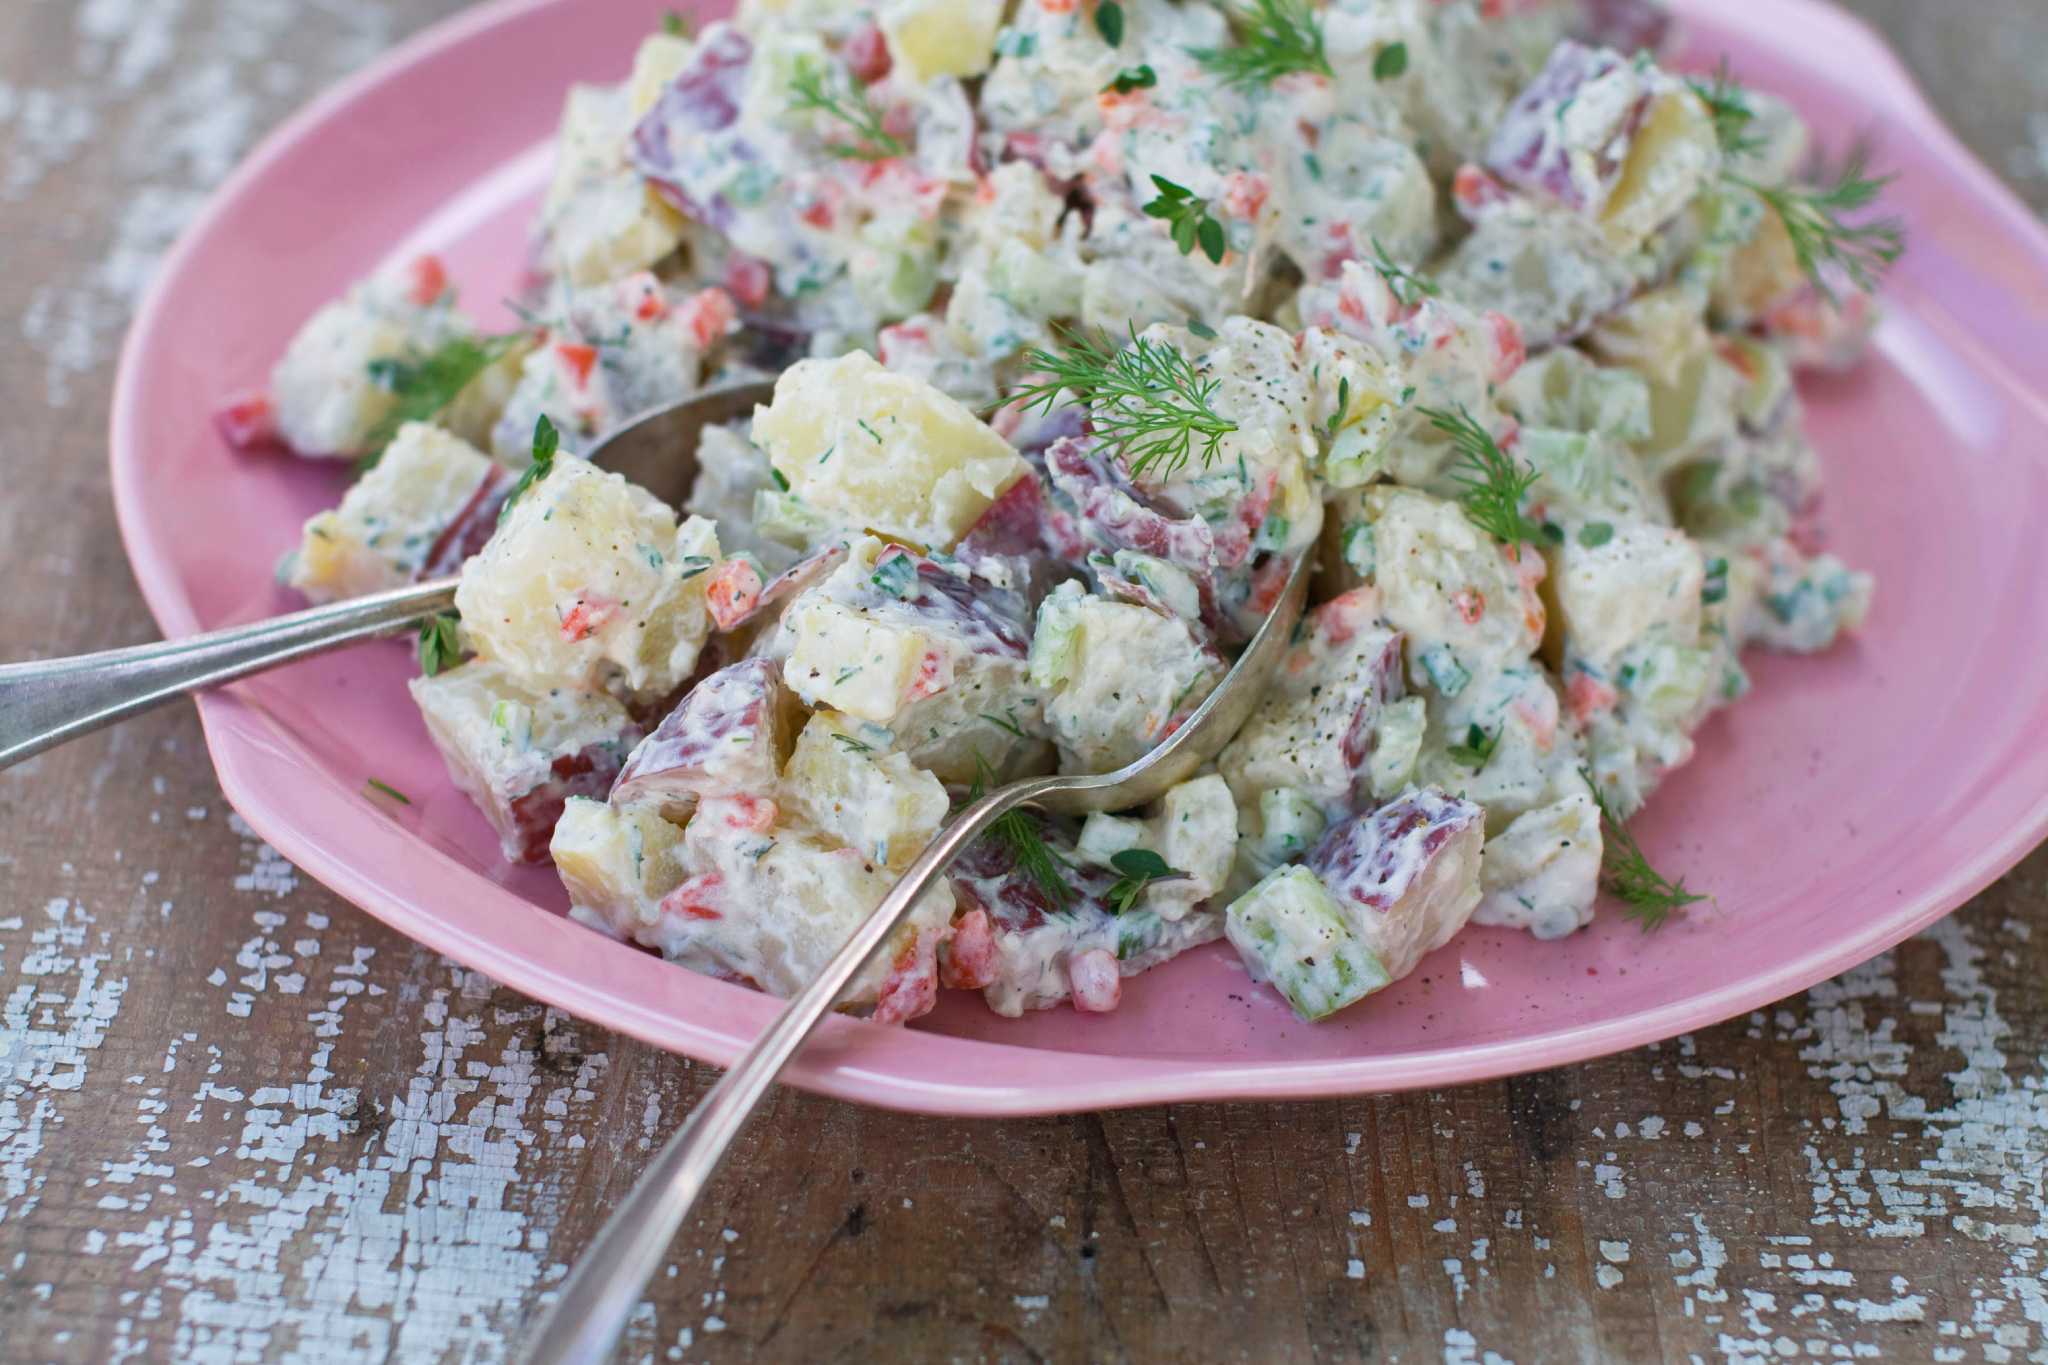 A healthy (but creamy) potato salad for summer.